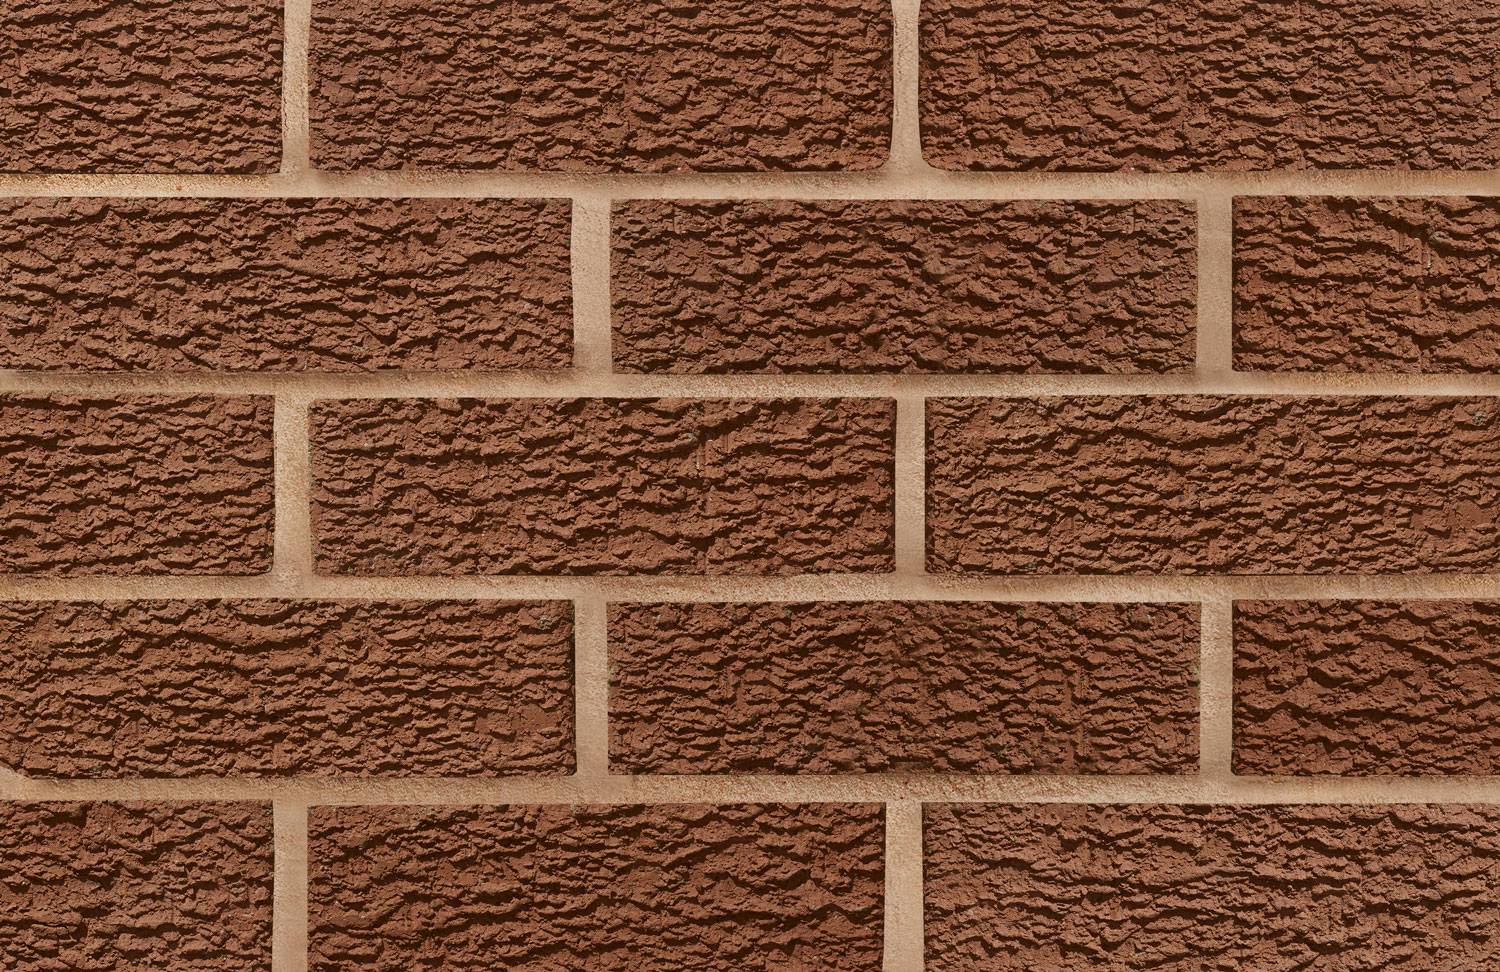 Carlton Red Rustic Clay Brick